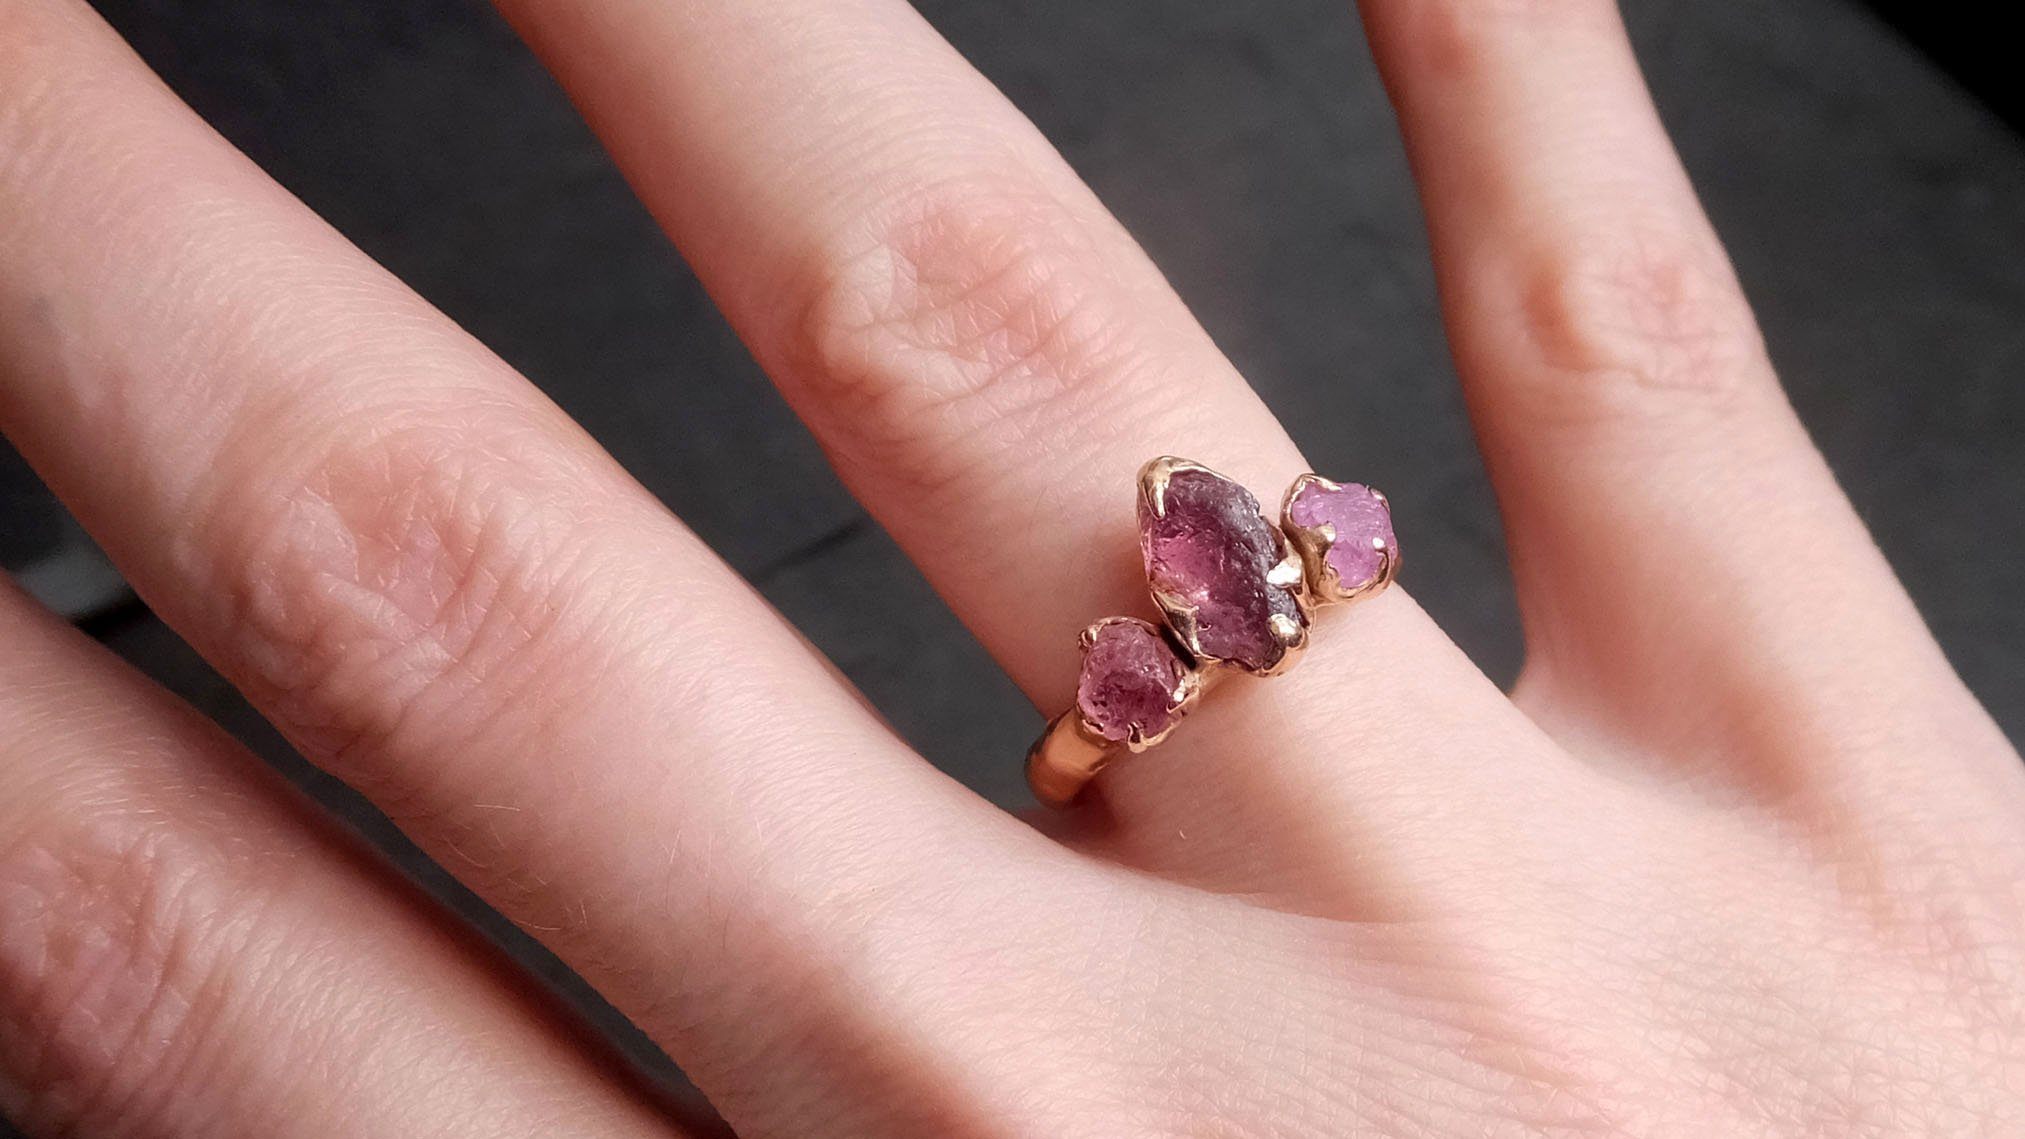 raw "pinks" sapphire multi stone 14k rose gold engagement ring wedding ring custom one of a kind gemstone ring 2141 Alternative Engagement